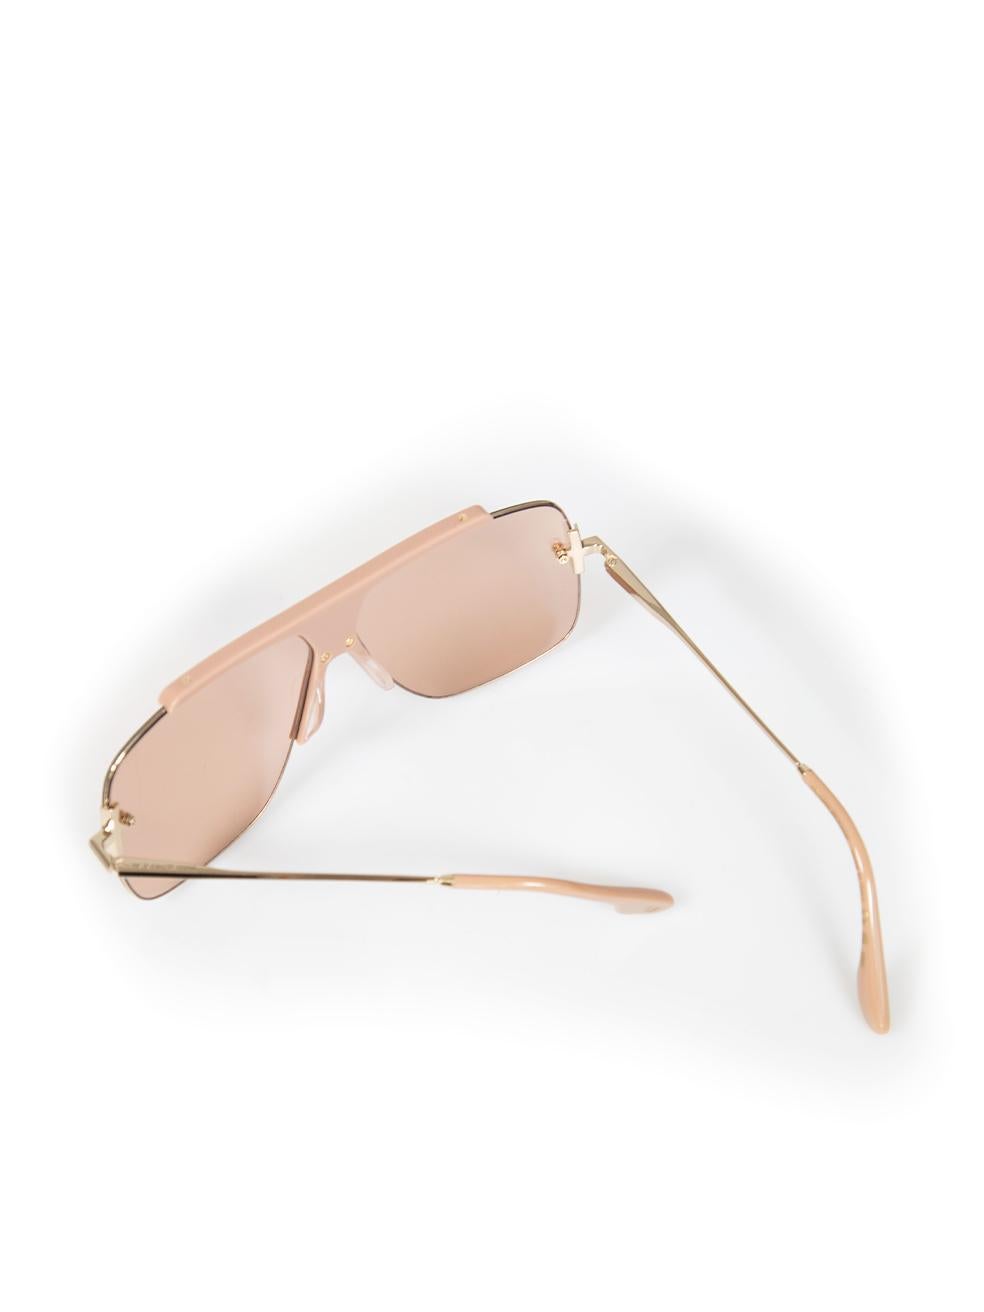 Victoria Beckham Nude Navigator Frame Sunglasses For Sale 3